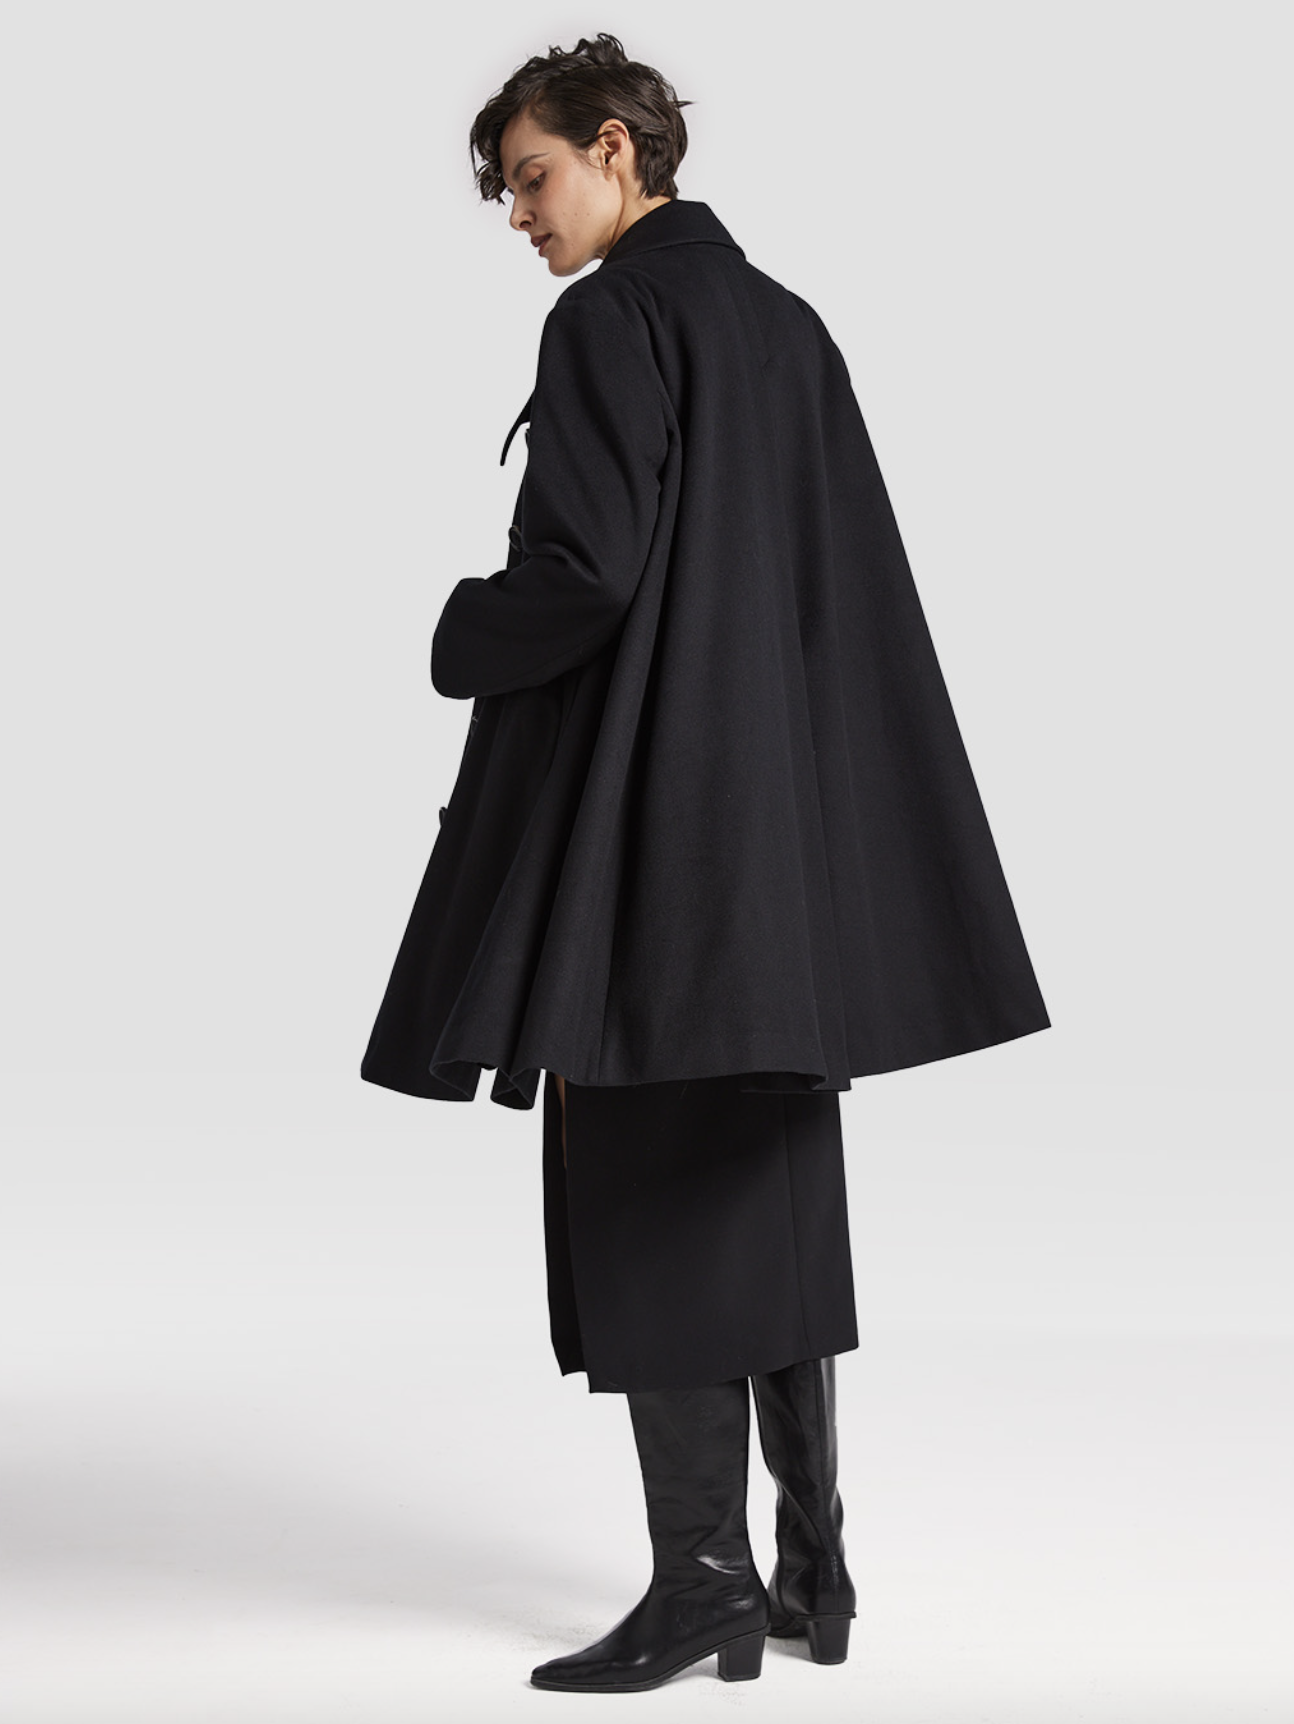 Cape Coat for Women 2023: The 13 Best Cape Coats to Wear Now